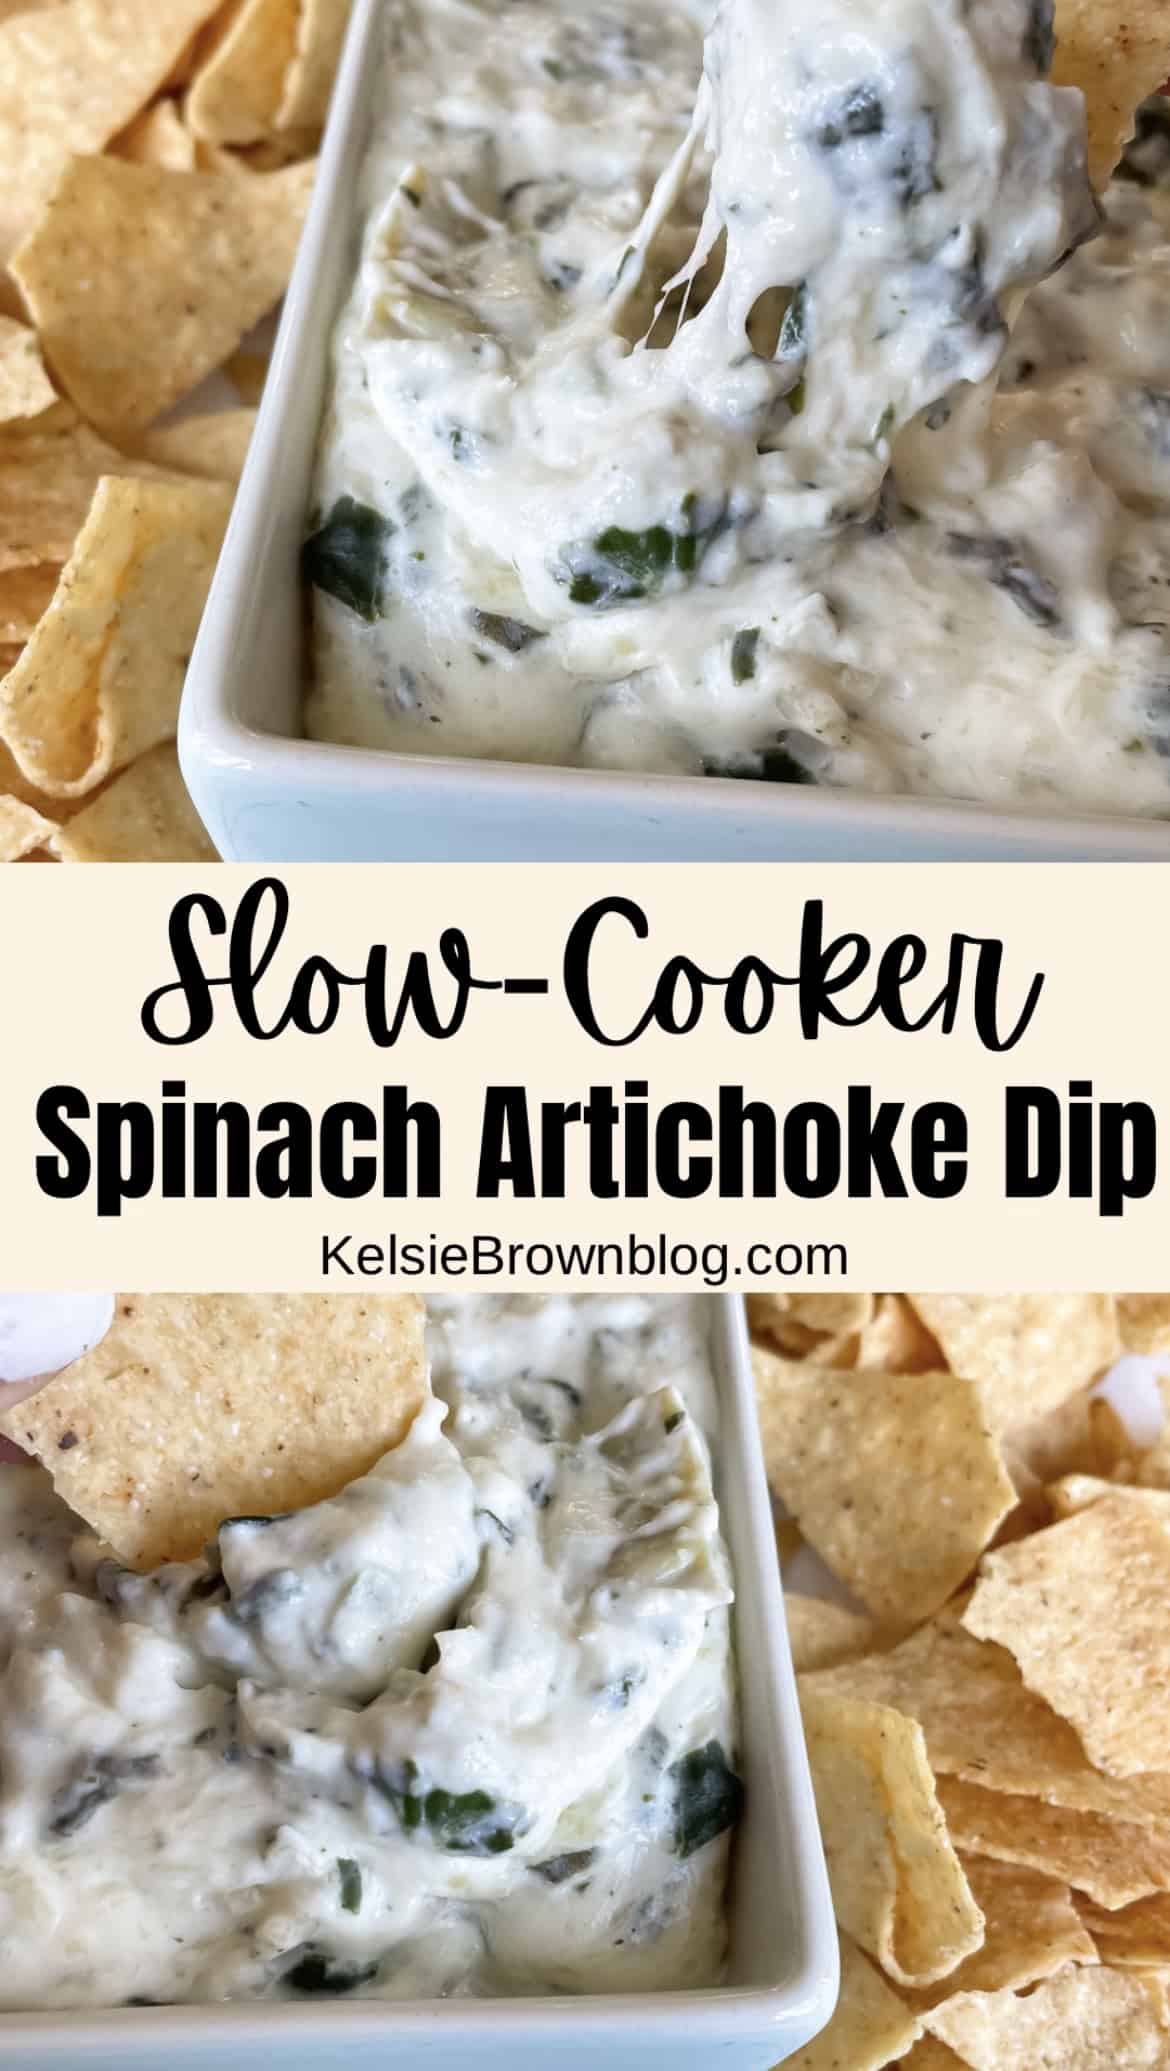 Crockpot Spinach Artichoke Dip